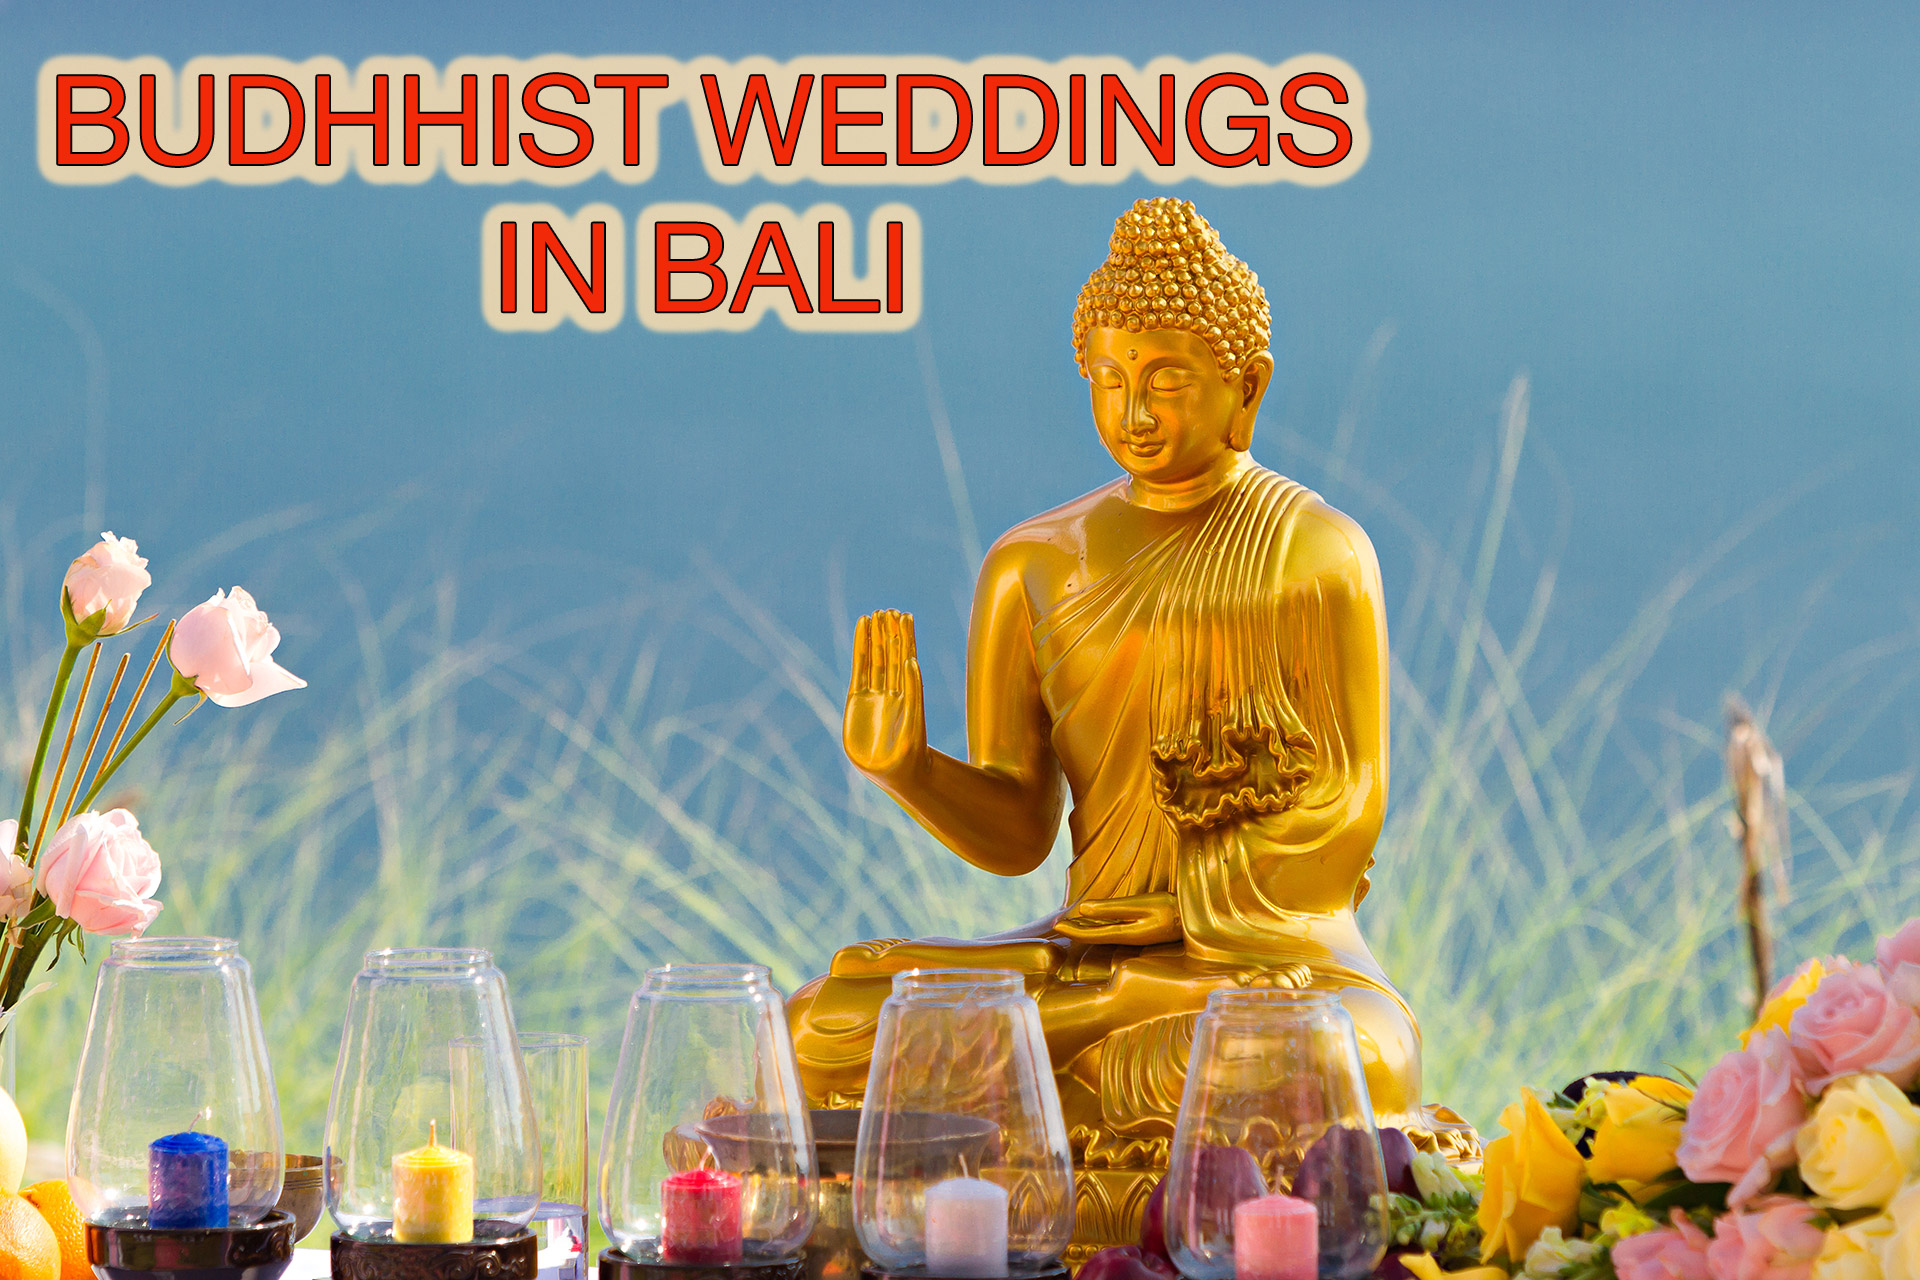 Buddhist wedding in Bali